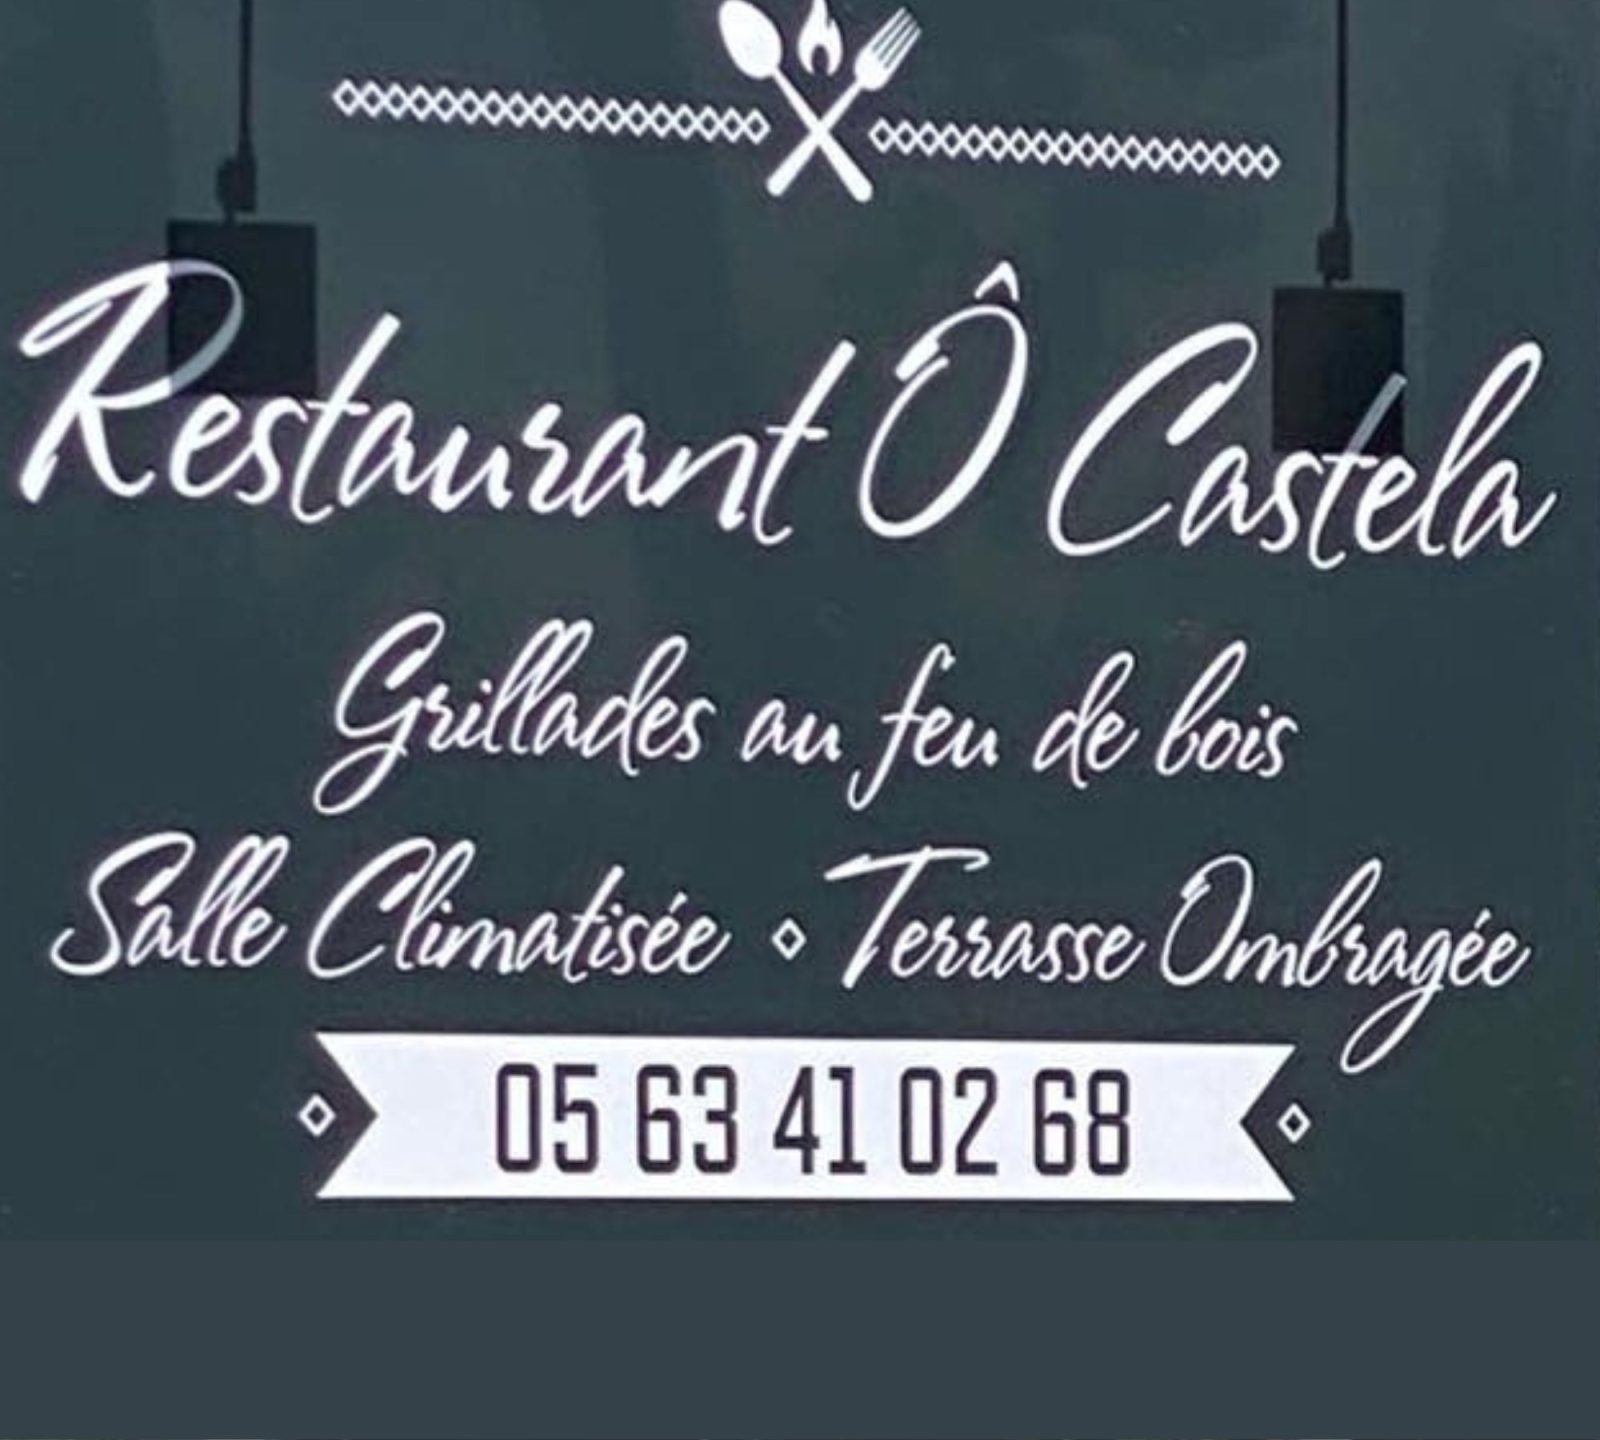 Restaurant Ô Castela